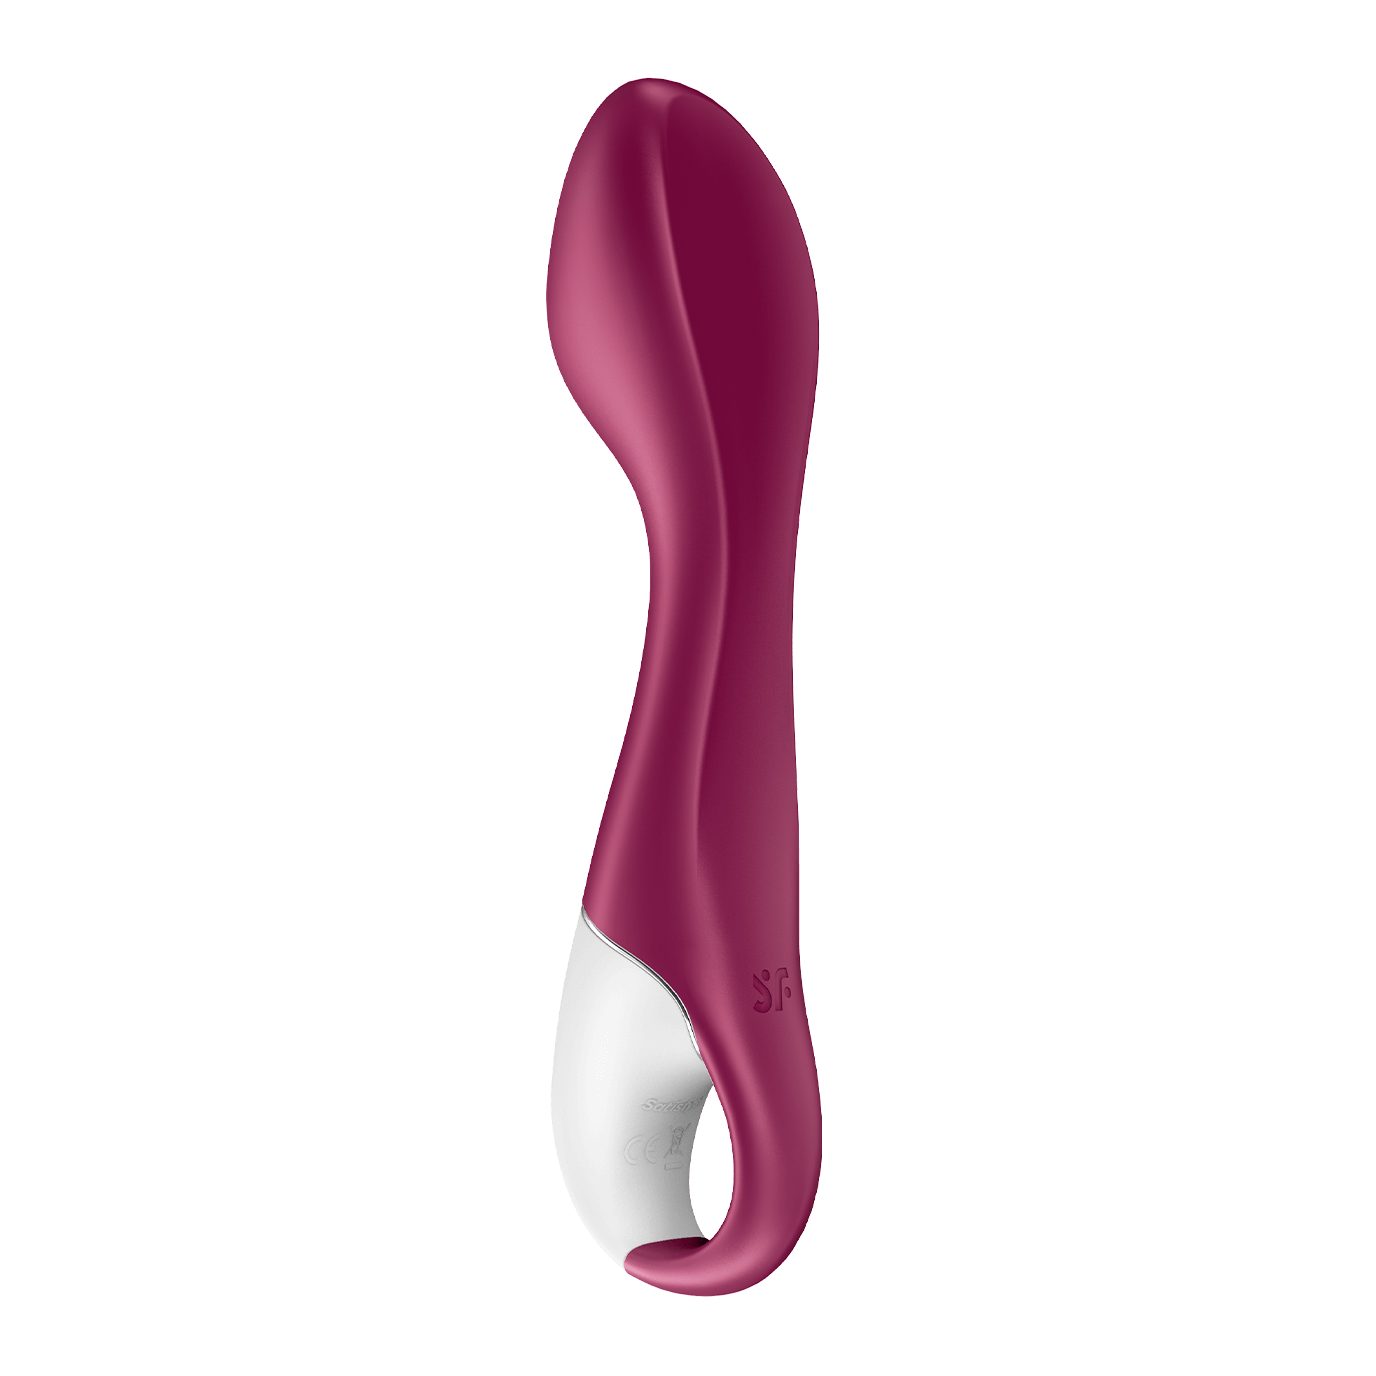 "Hot Spot App", Satisfyer Connect Rabbit, Wärmefunktion Klitoris-Stimulator Satisfyer Bluetooth,